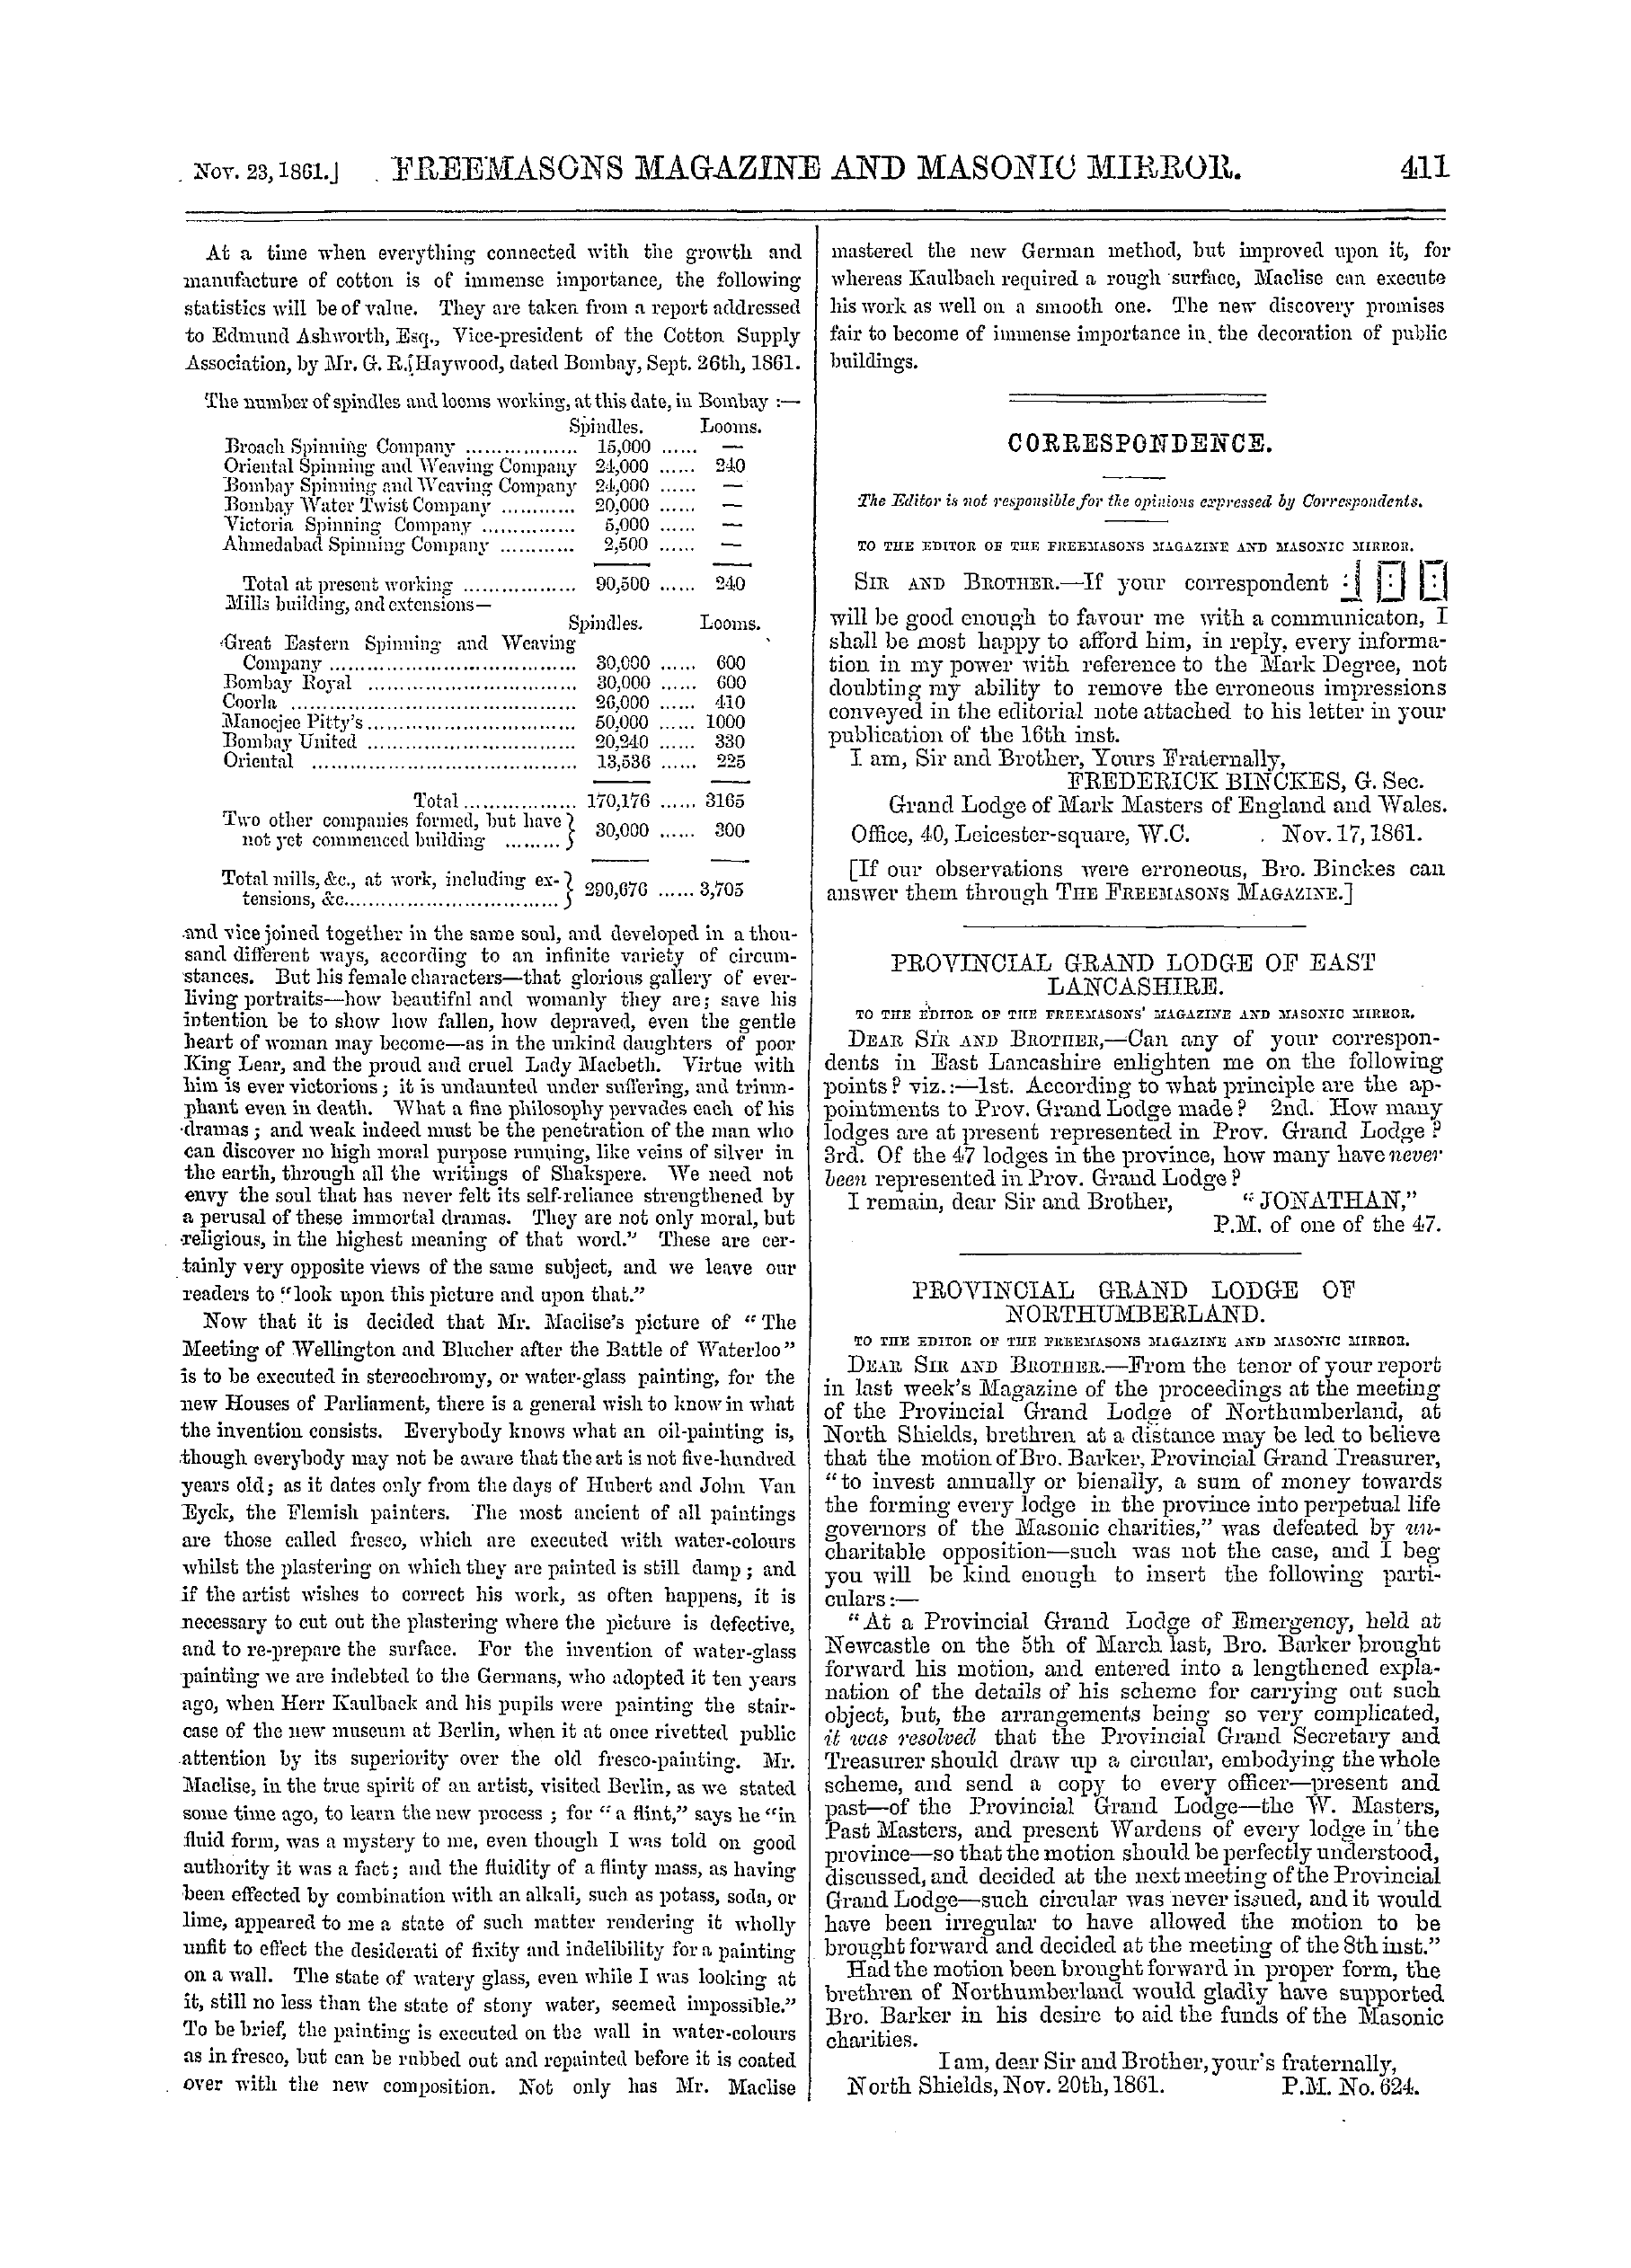 The Freemasons' Monthly Magazine: 1861-11-23 - Correspondence.